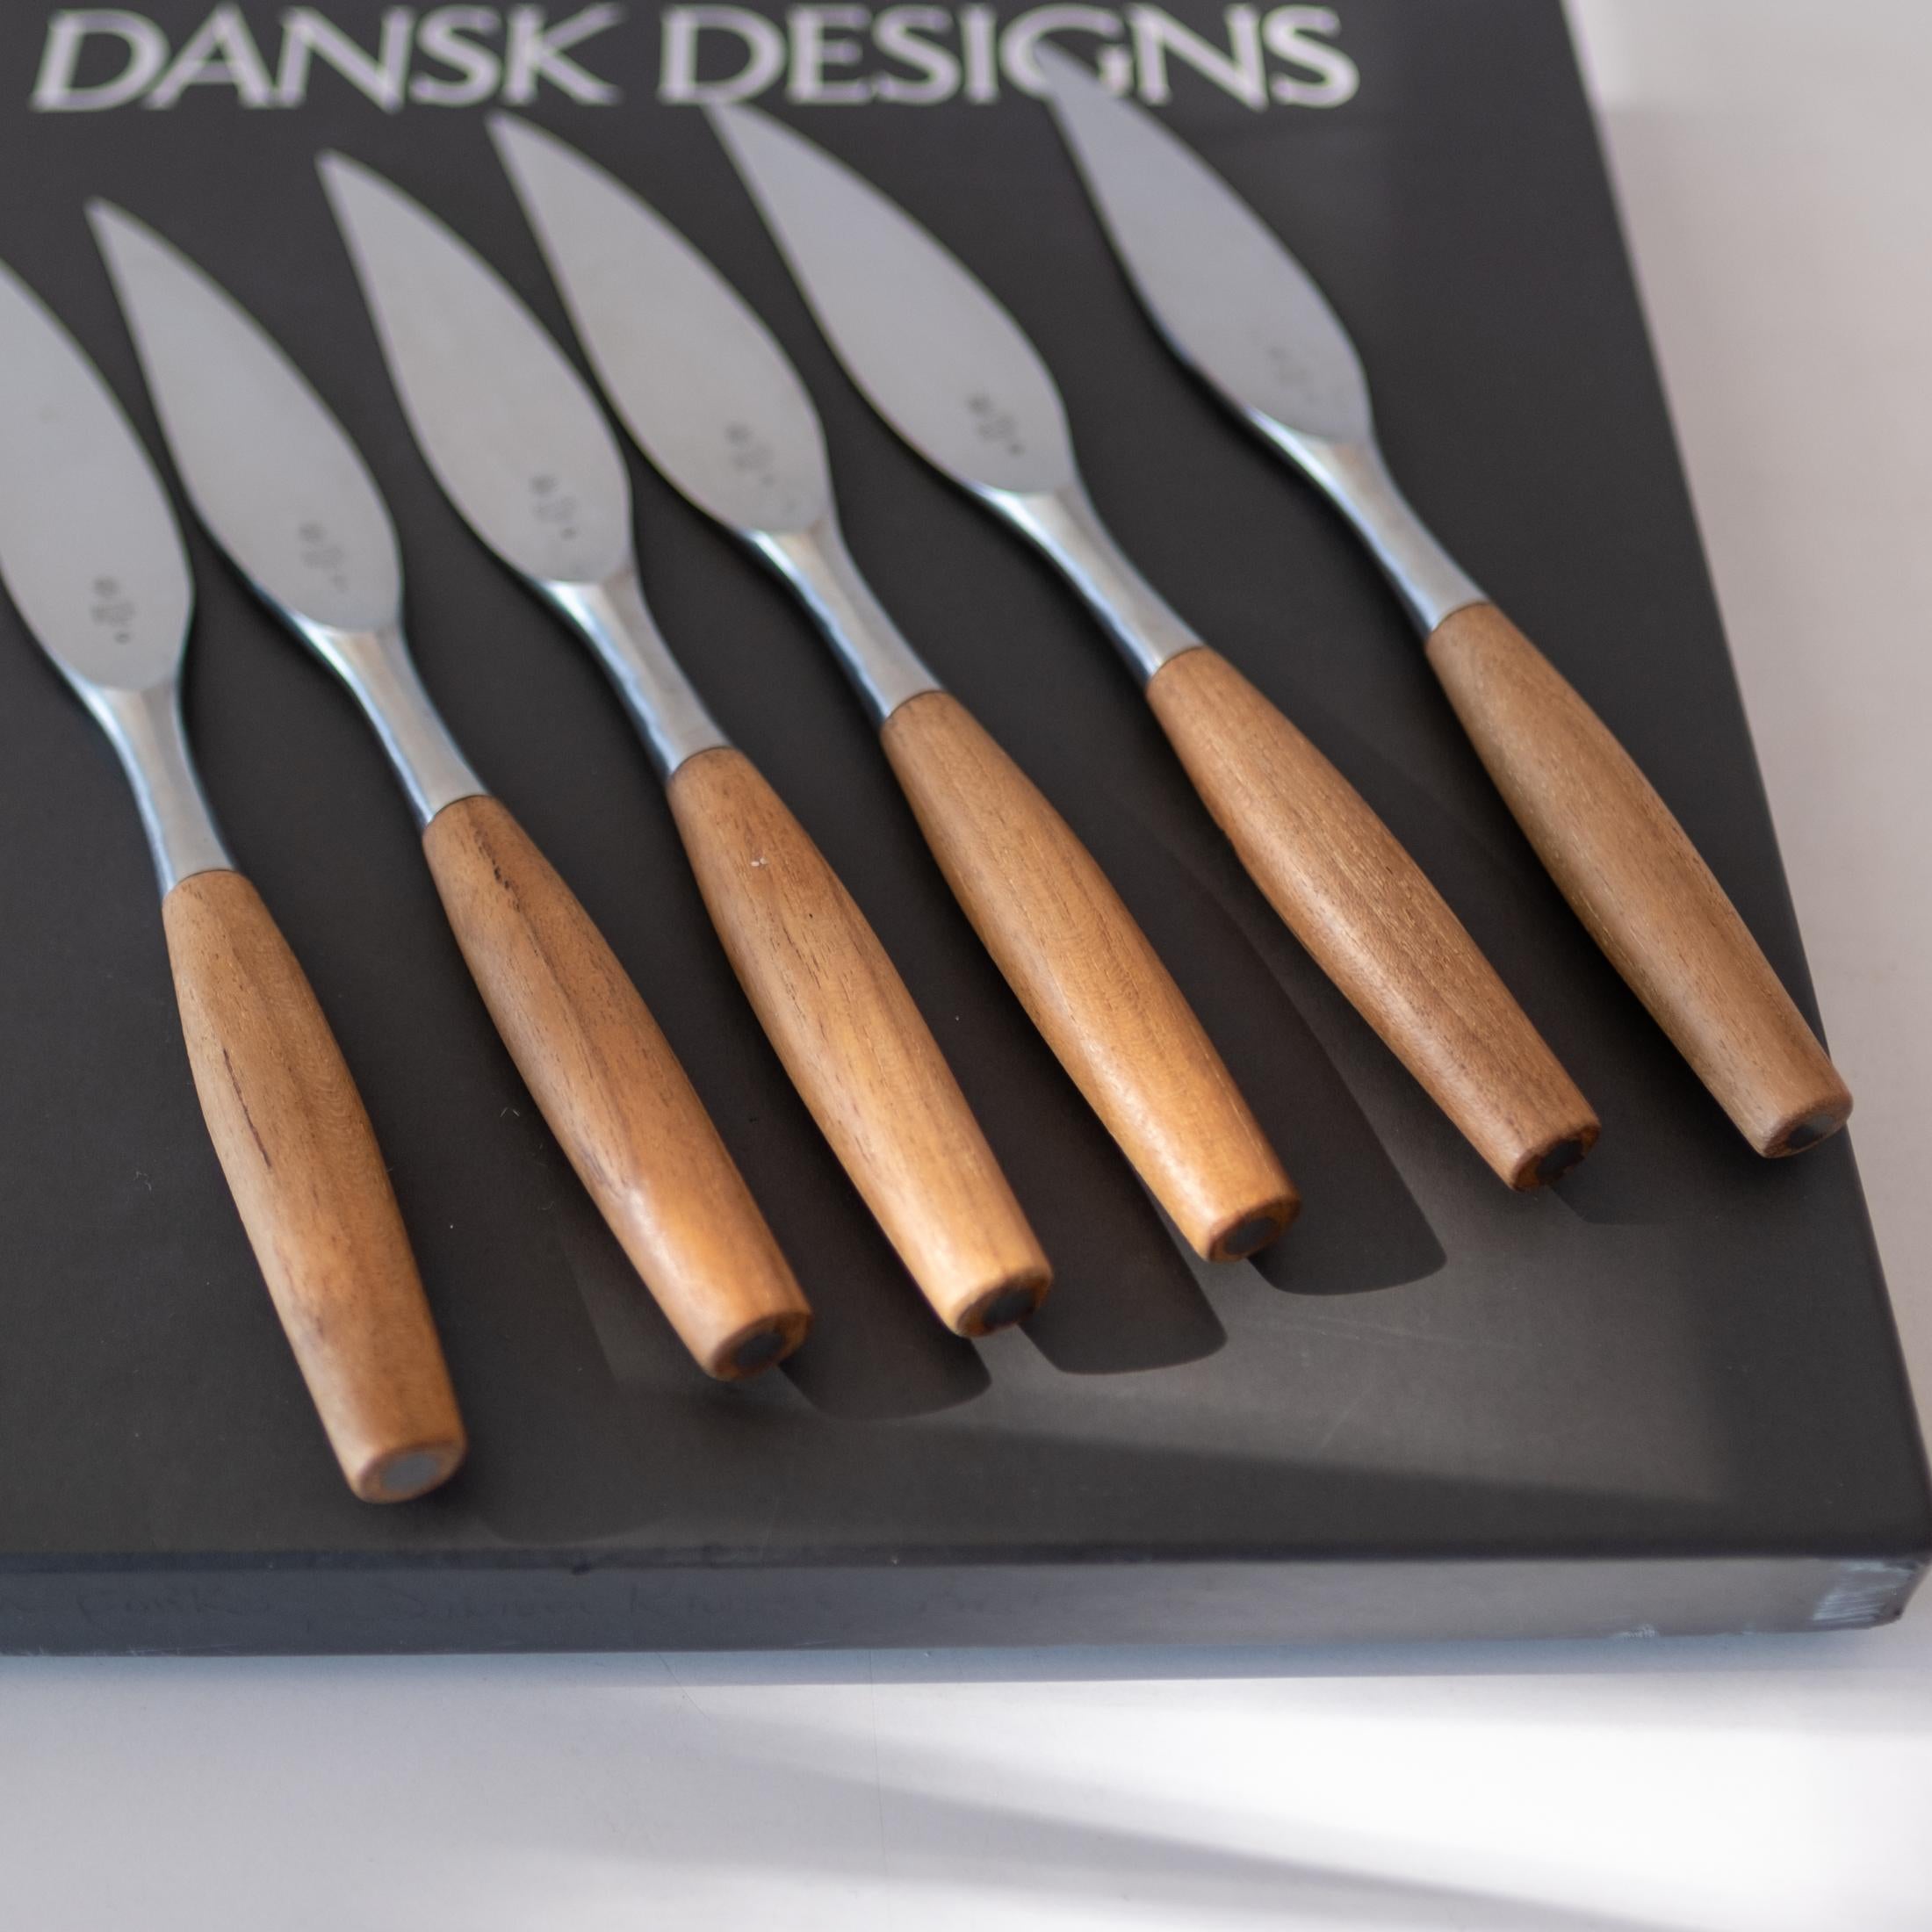 Stainless Steel Steak Knives by Jens Quistgaard for Dansk